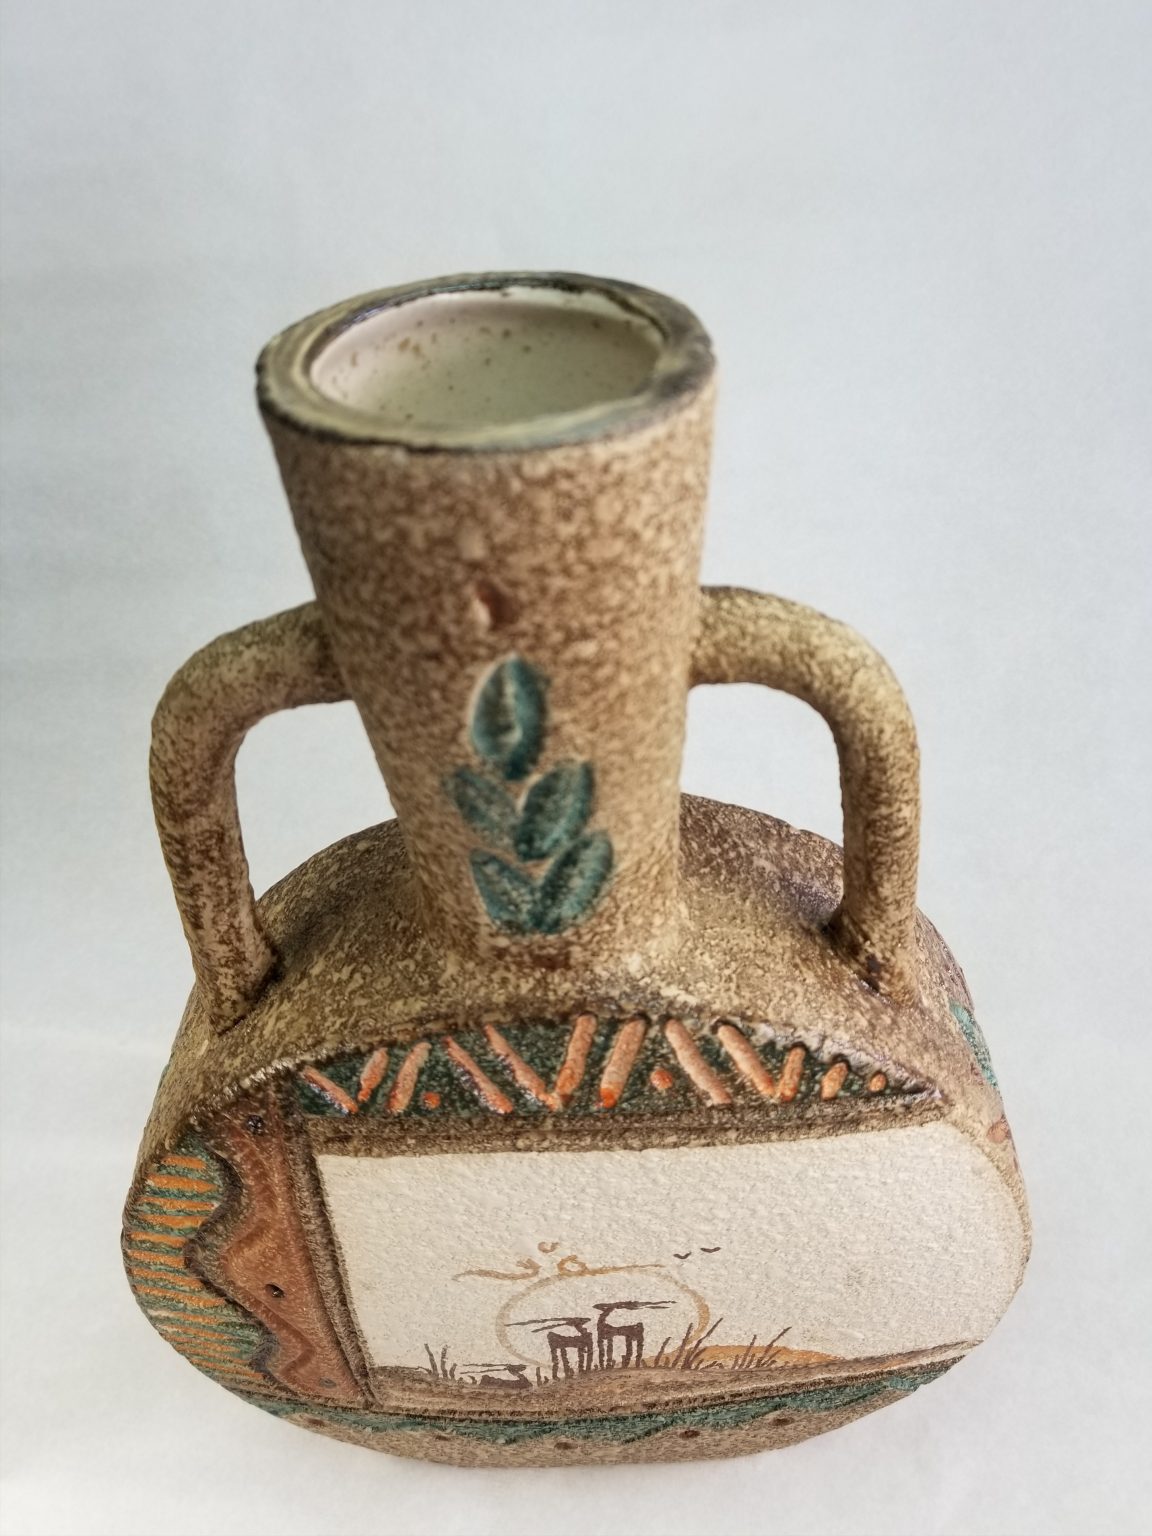 Ancient sialk ceramic wine/water decanter